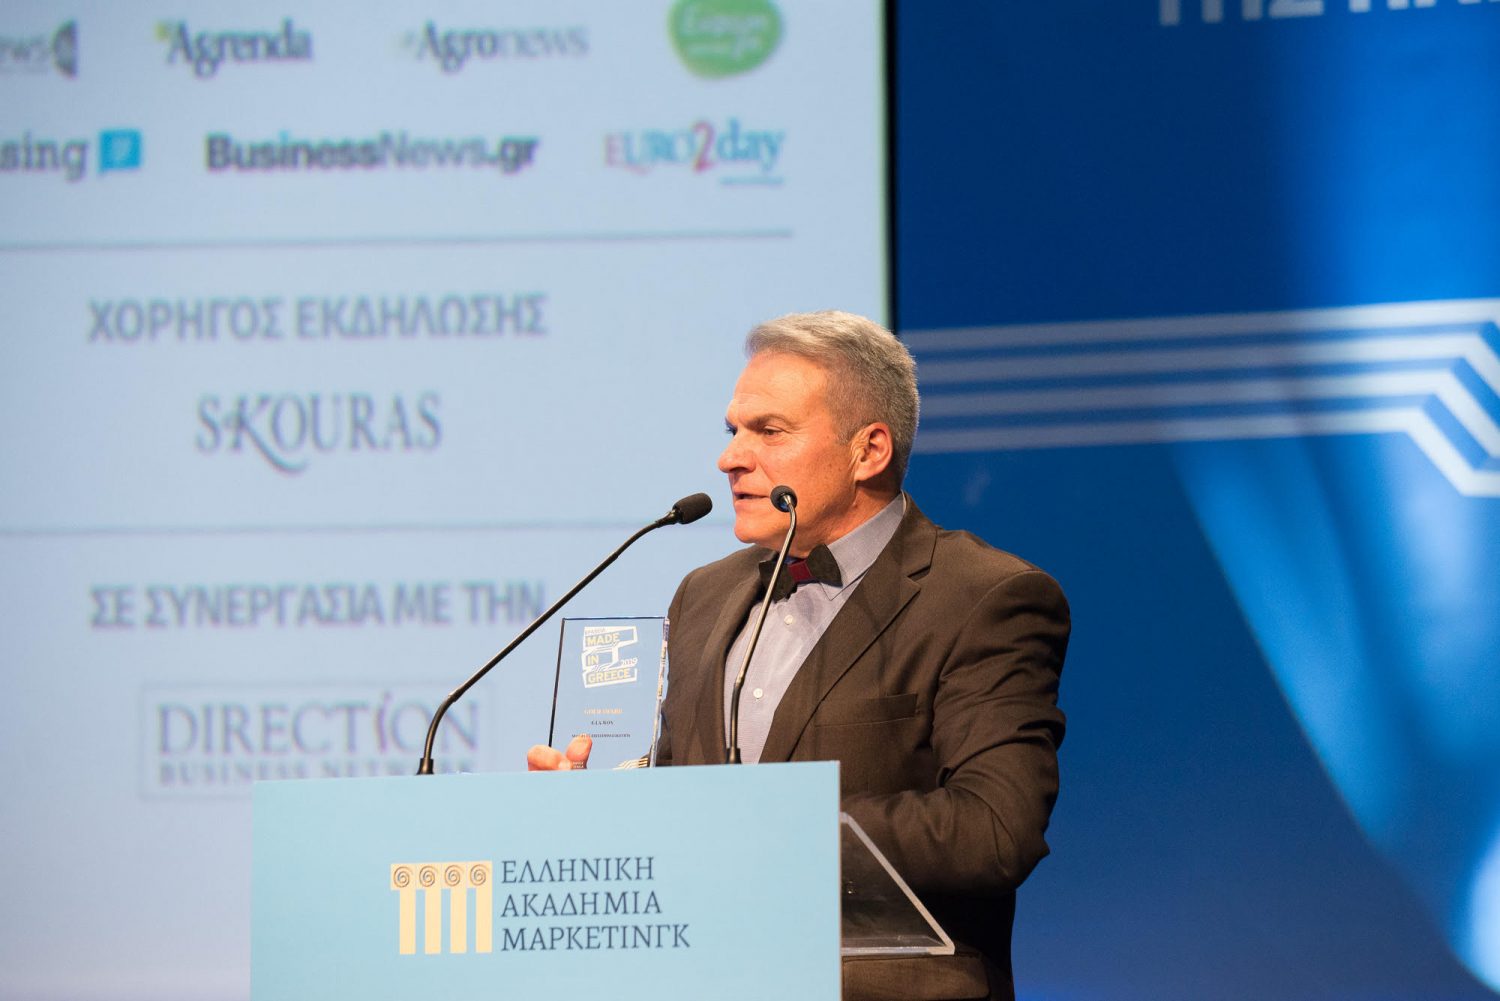 tasteid.gr: “Χρυσό Βραβείο για την E-LA-WON από την Ελληνική Ακαδημία Μάρκετινγκ”